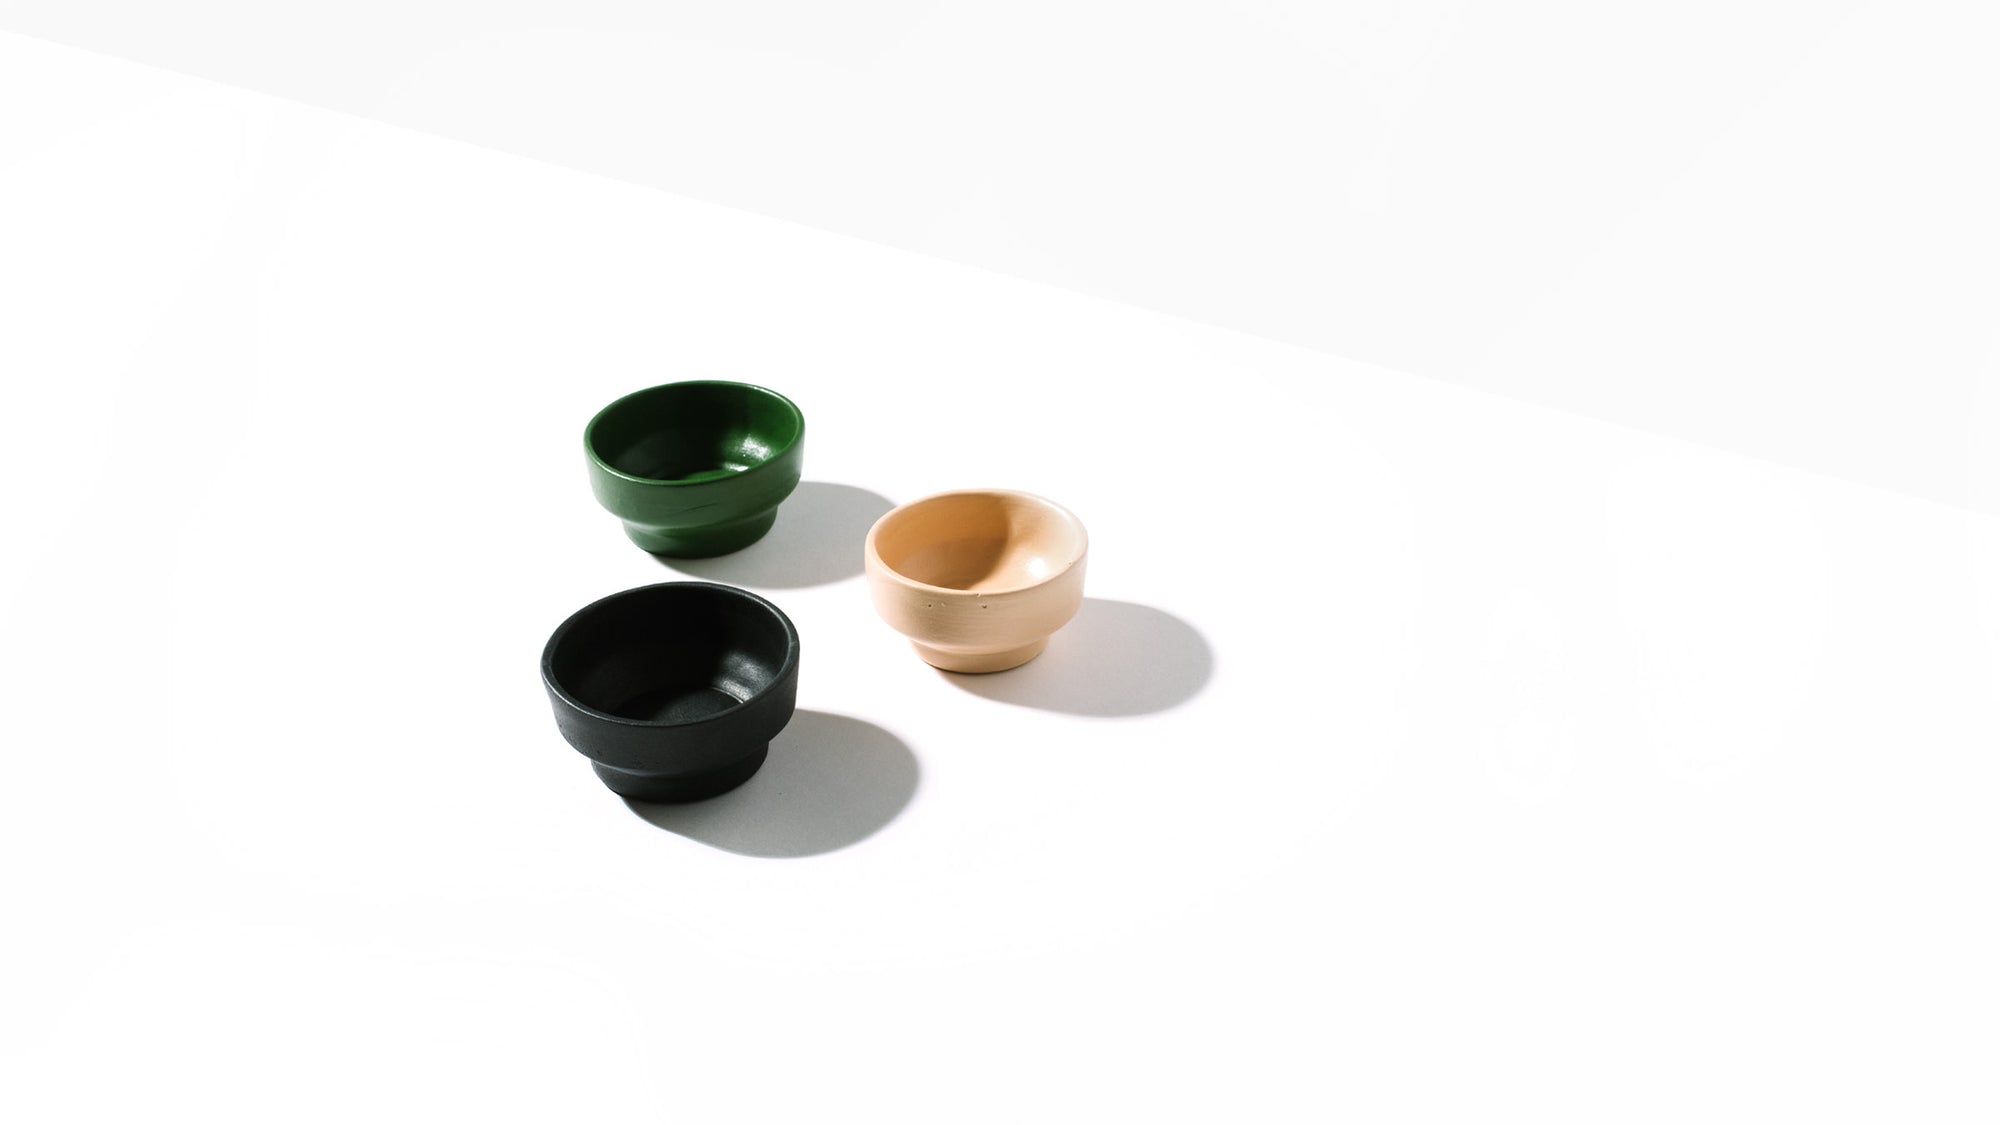 Green Salt Bowl - Workaday Handmade - Homecoming